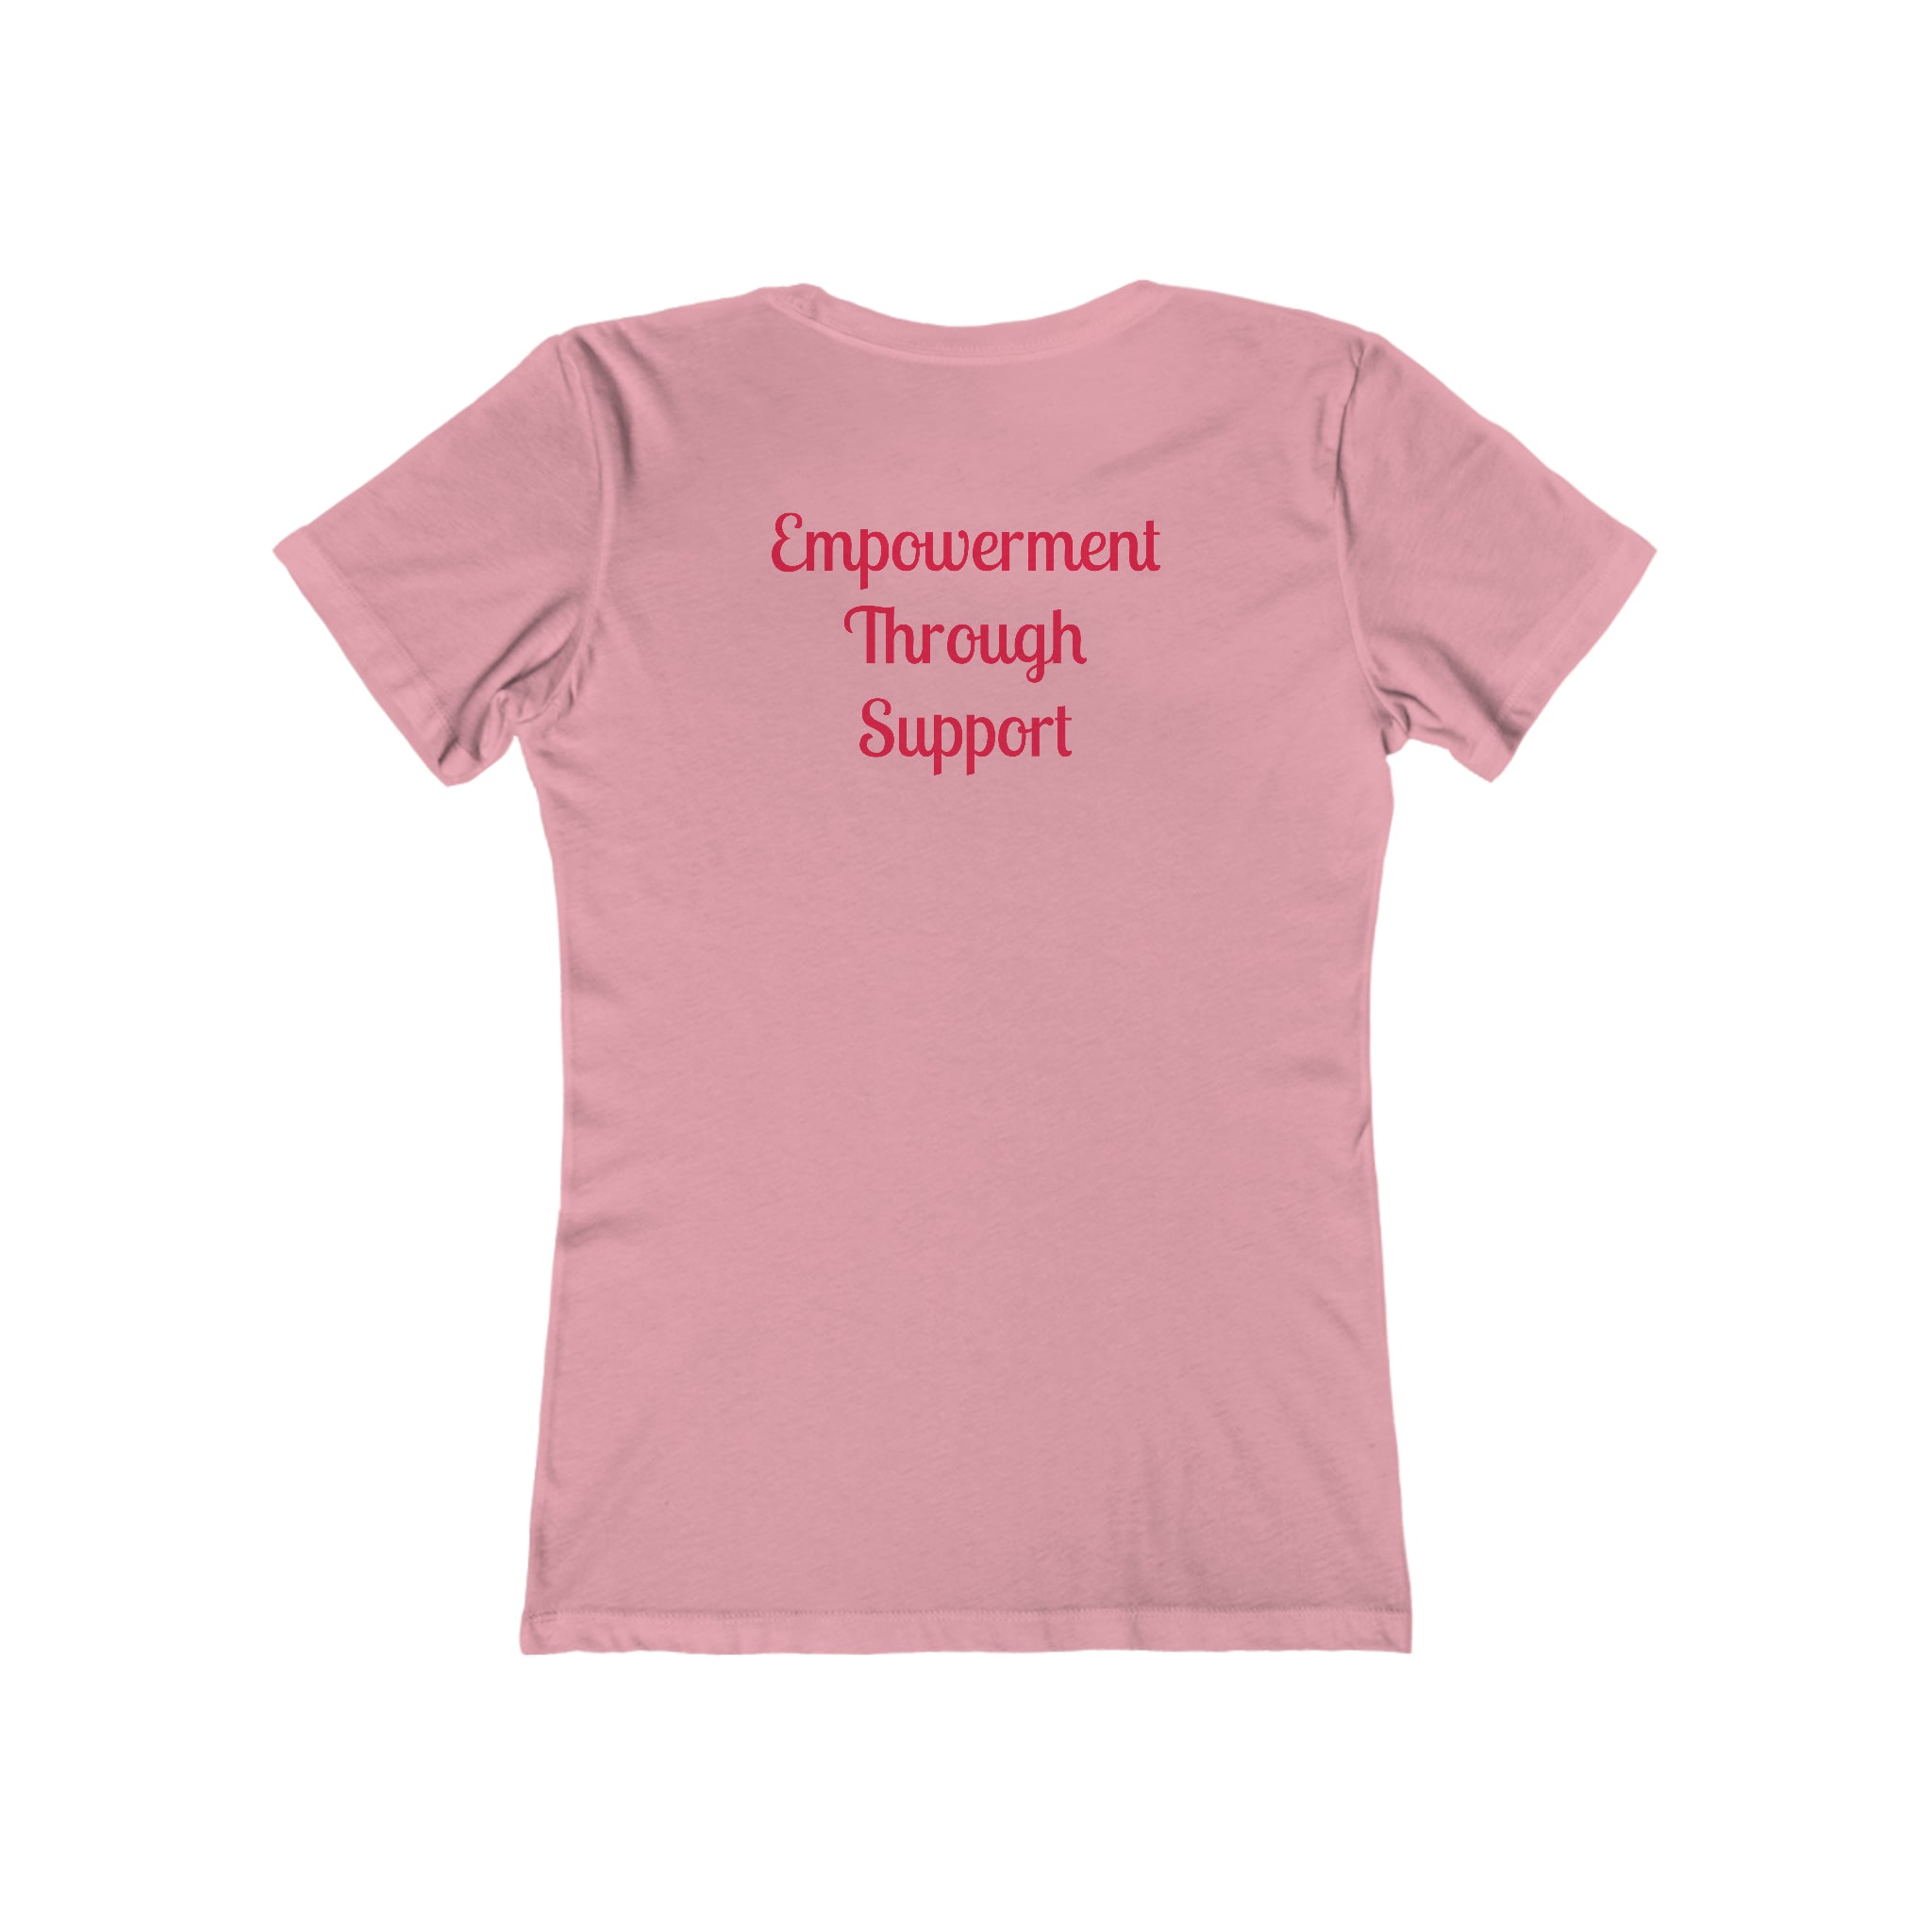 Empowerment Through Support Boyfriend Tee Solid Light Pink Awareness Break the Stigma Mental Health Support Pledge Donation slim fit shirt Tee women shirt T-Shirt 3846750420948365537_2048_910480fc-1035-4049-9ebb-00fd285cce8e Printify